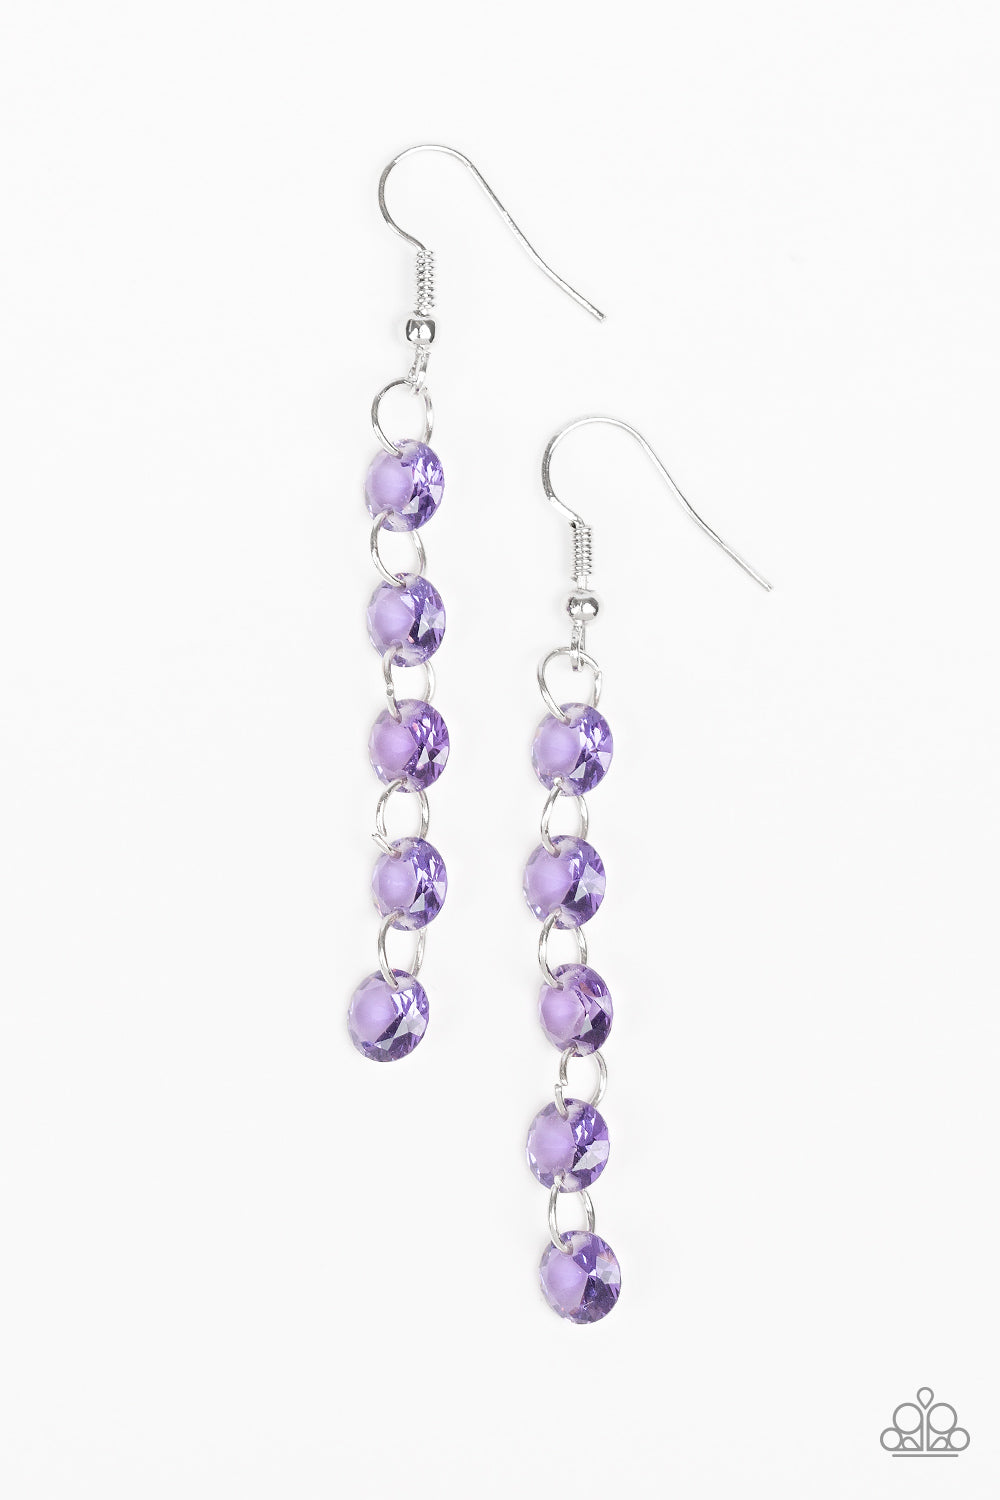 Paparazzi Trickle-Down Effect - Purple Prisms - Silver Link - Earrings - $5 Jewelry with Ashley Swint